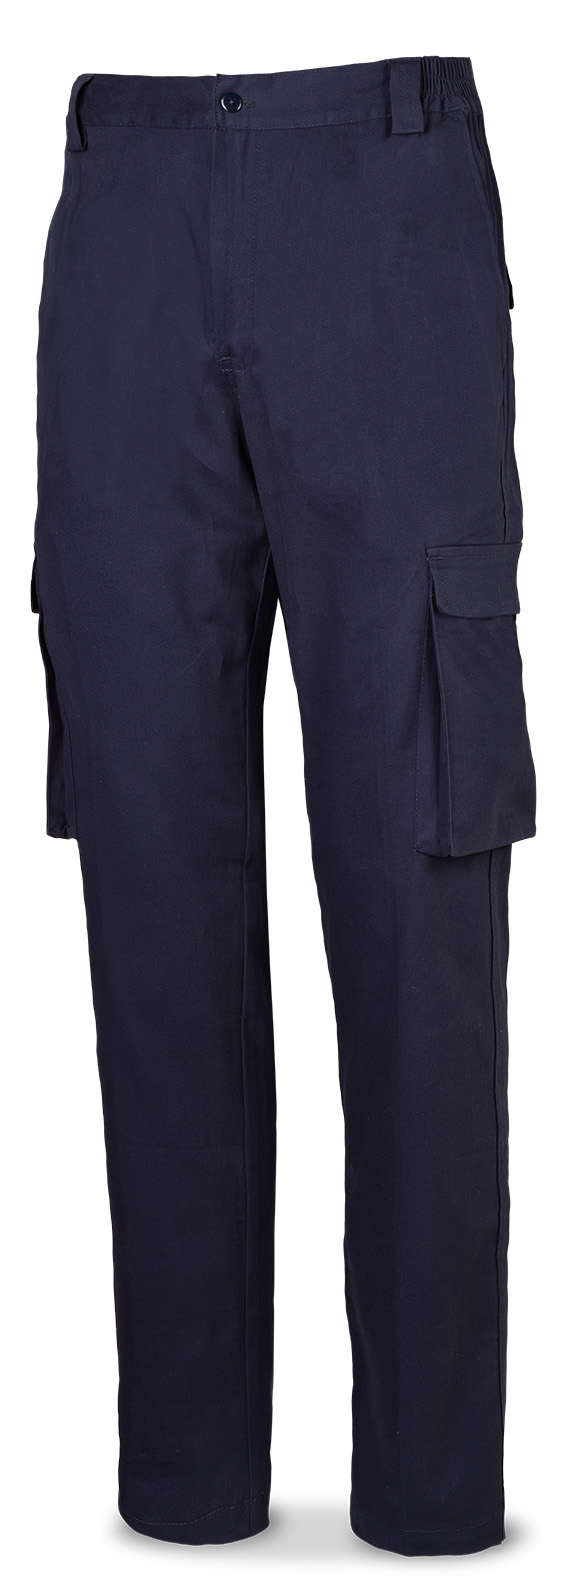 588-PBSA Vestuario Laboral Serie Casual Pantalón STRETCH básico azul marino algodón 240 gr.